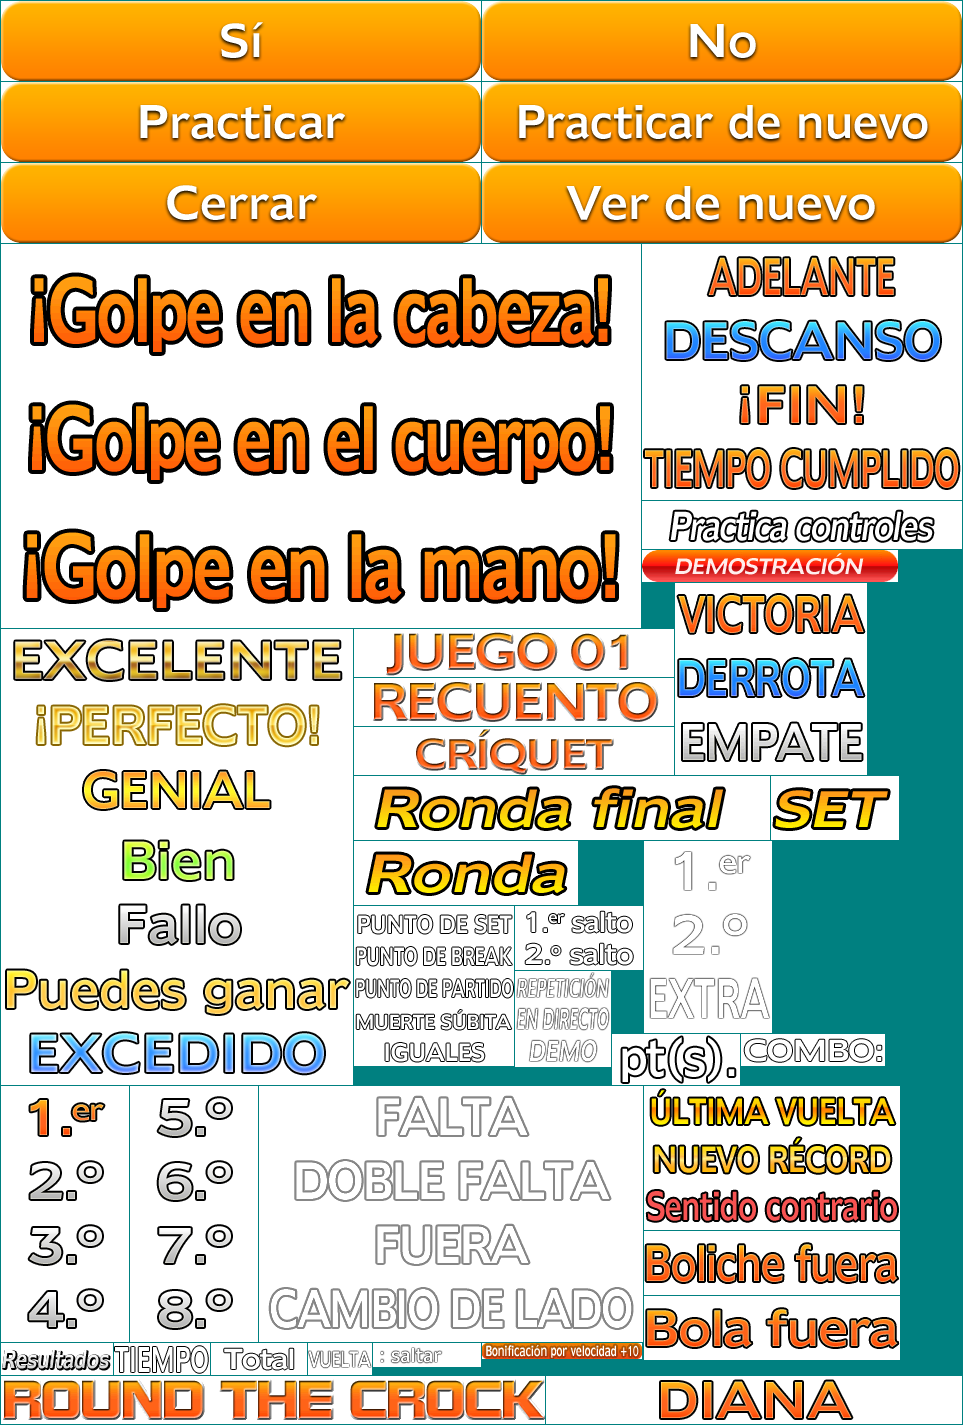 Text (Spanish)